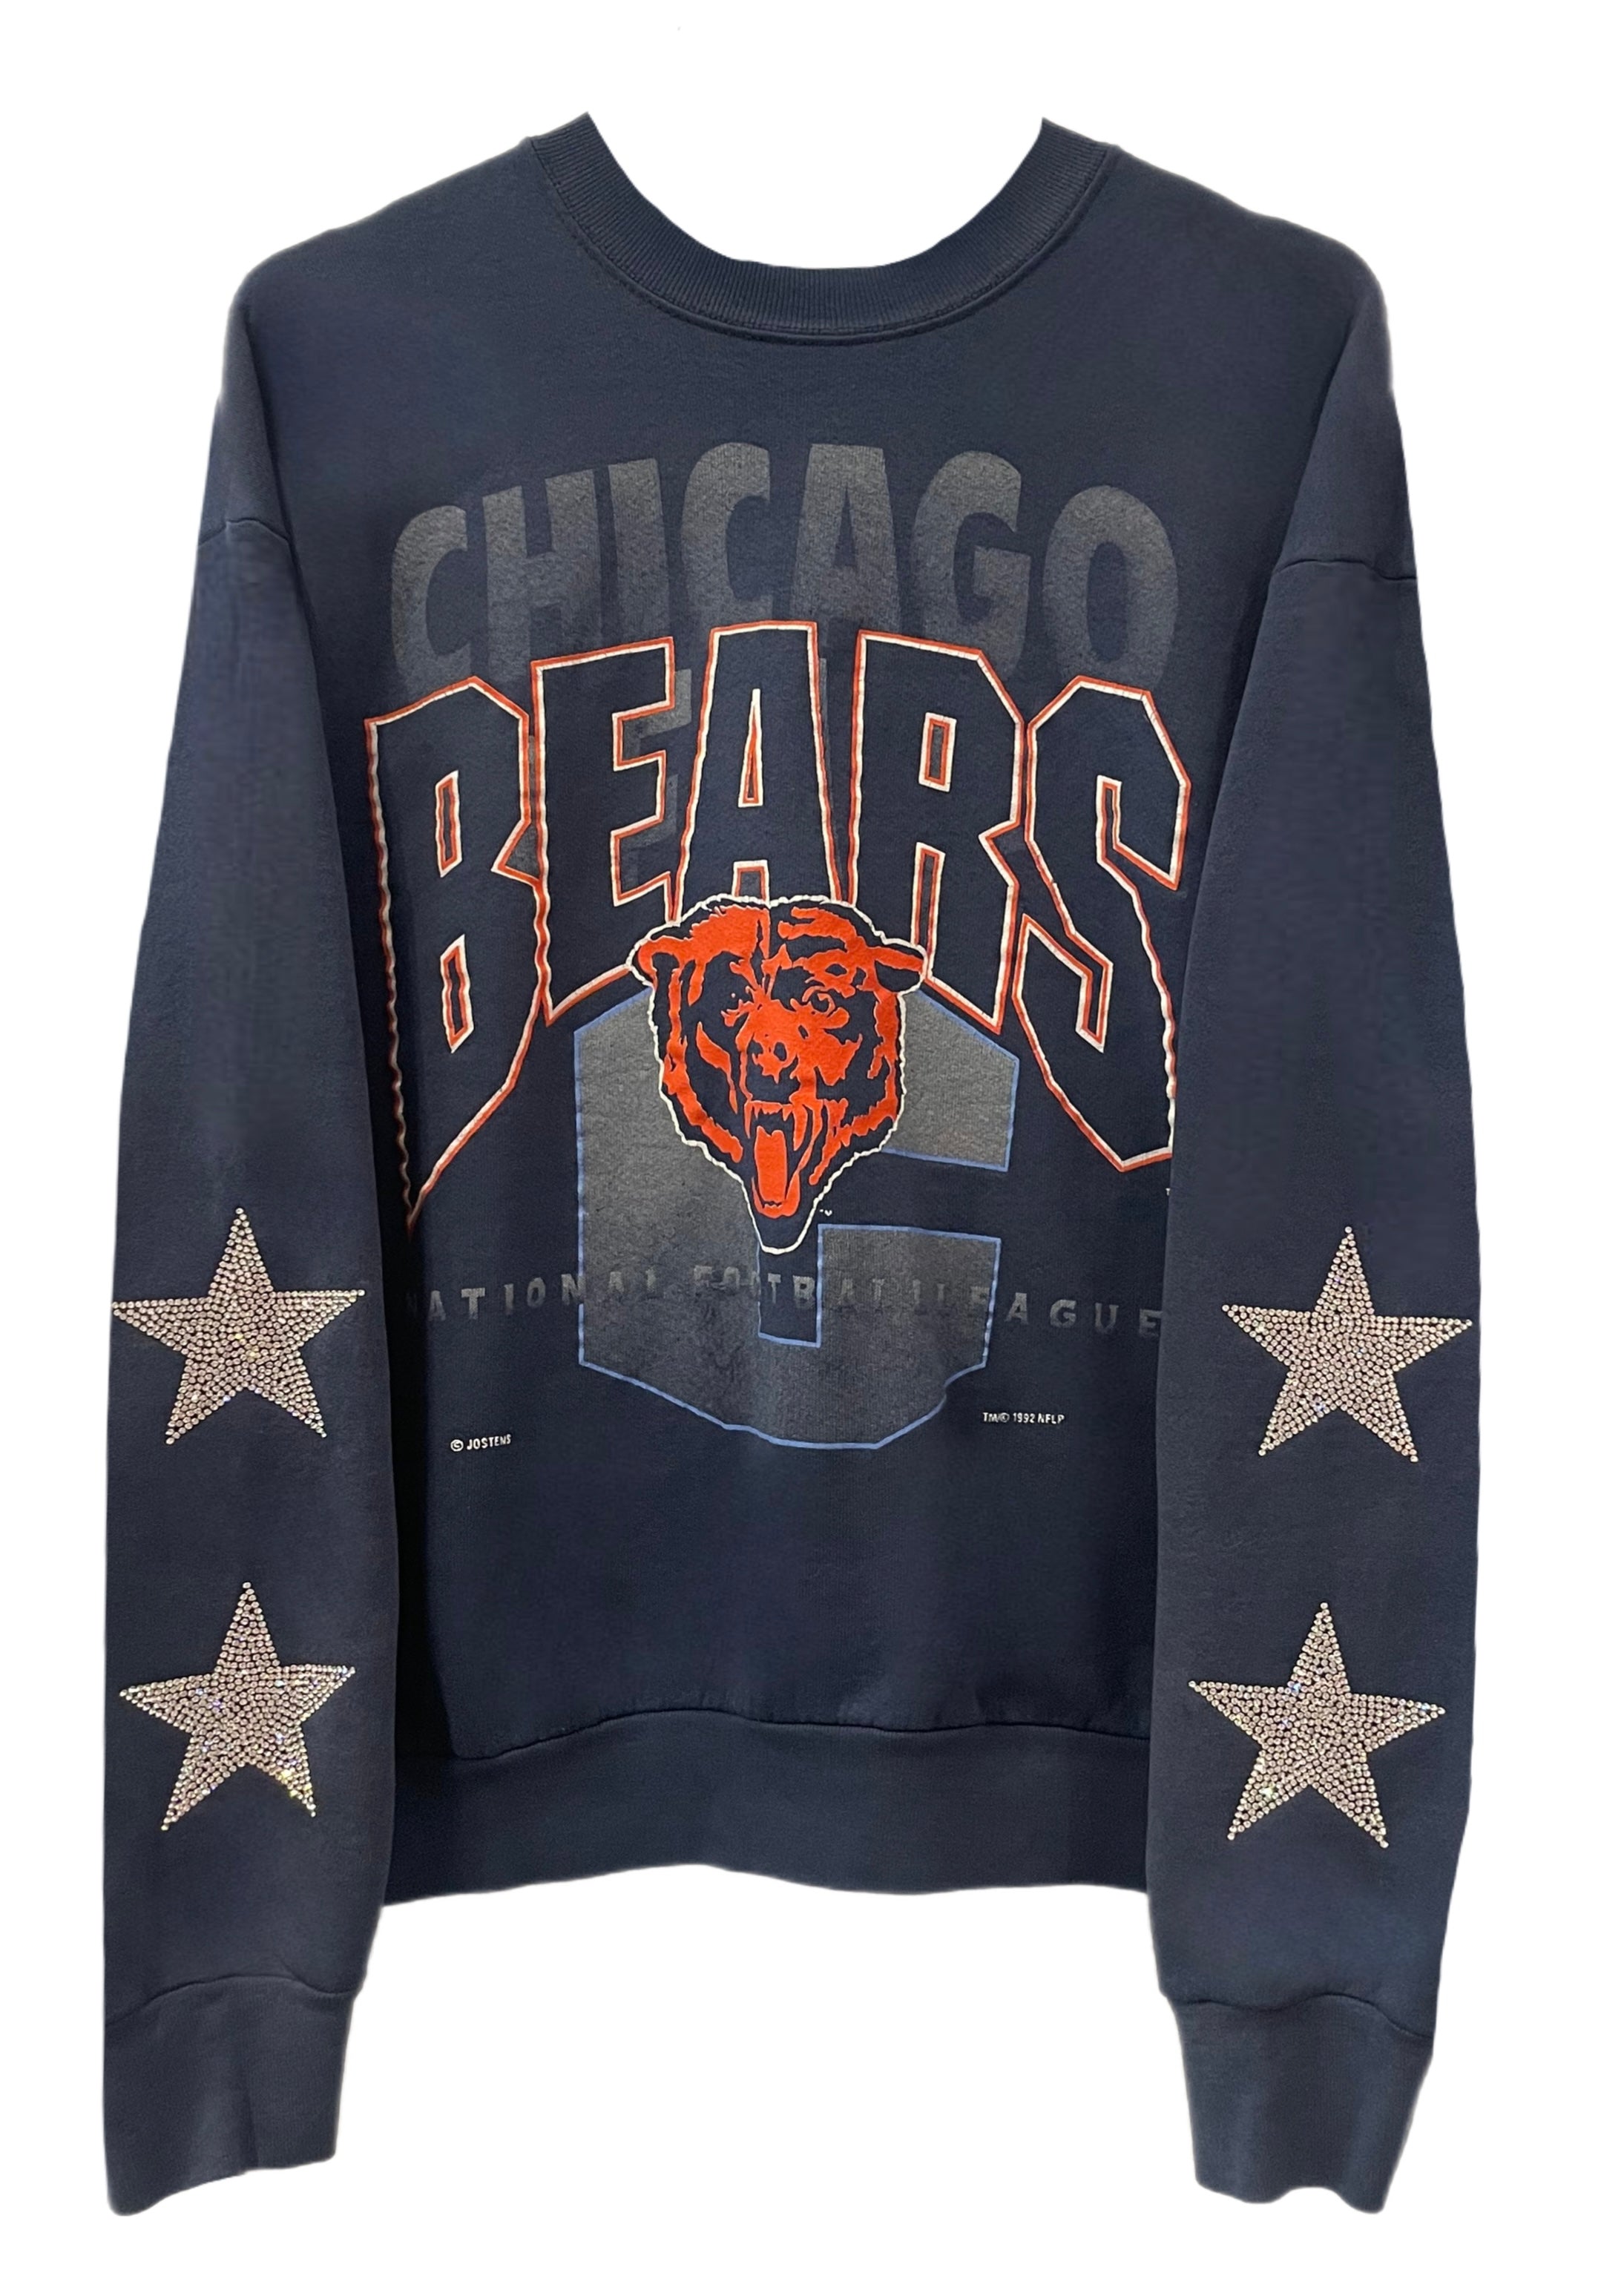 chicago bears sweatshirt vintage